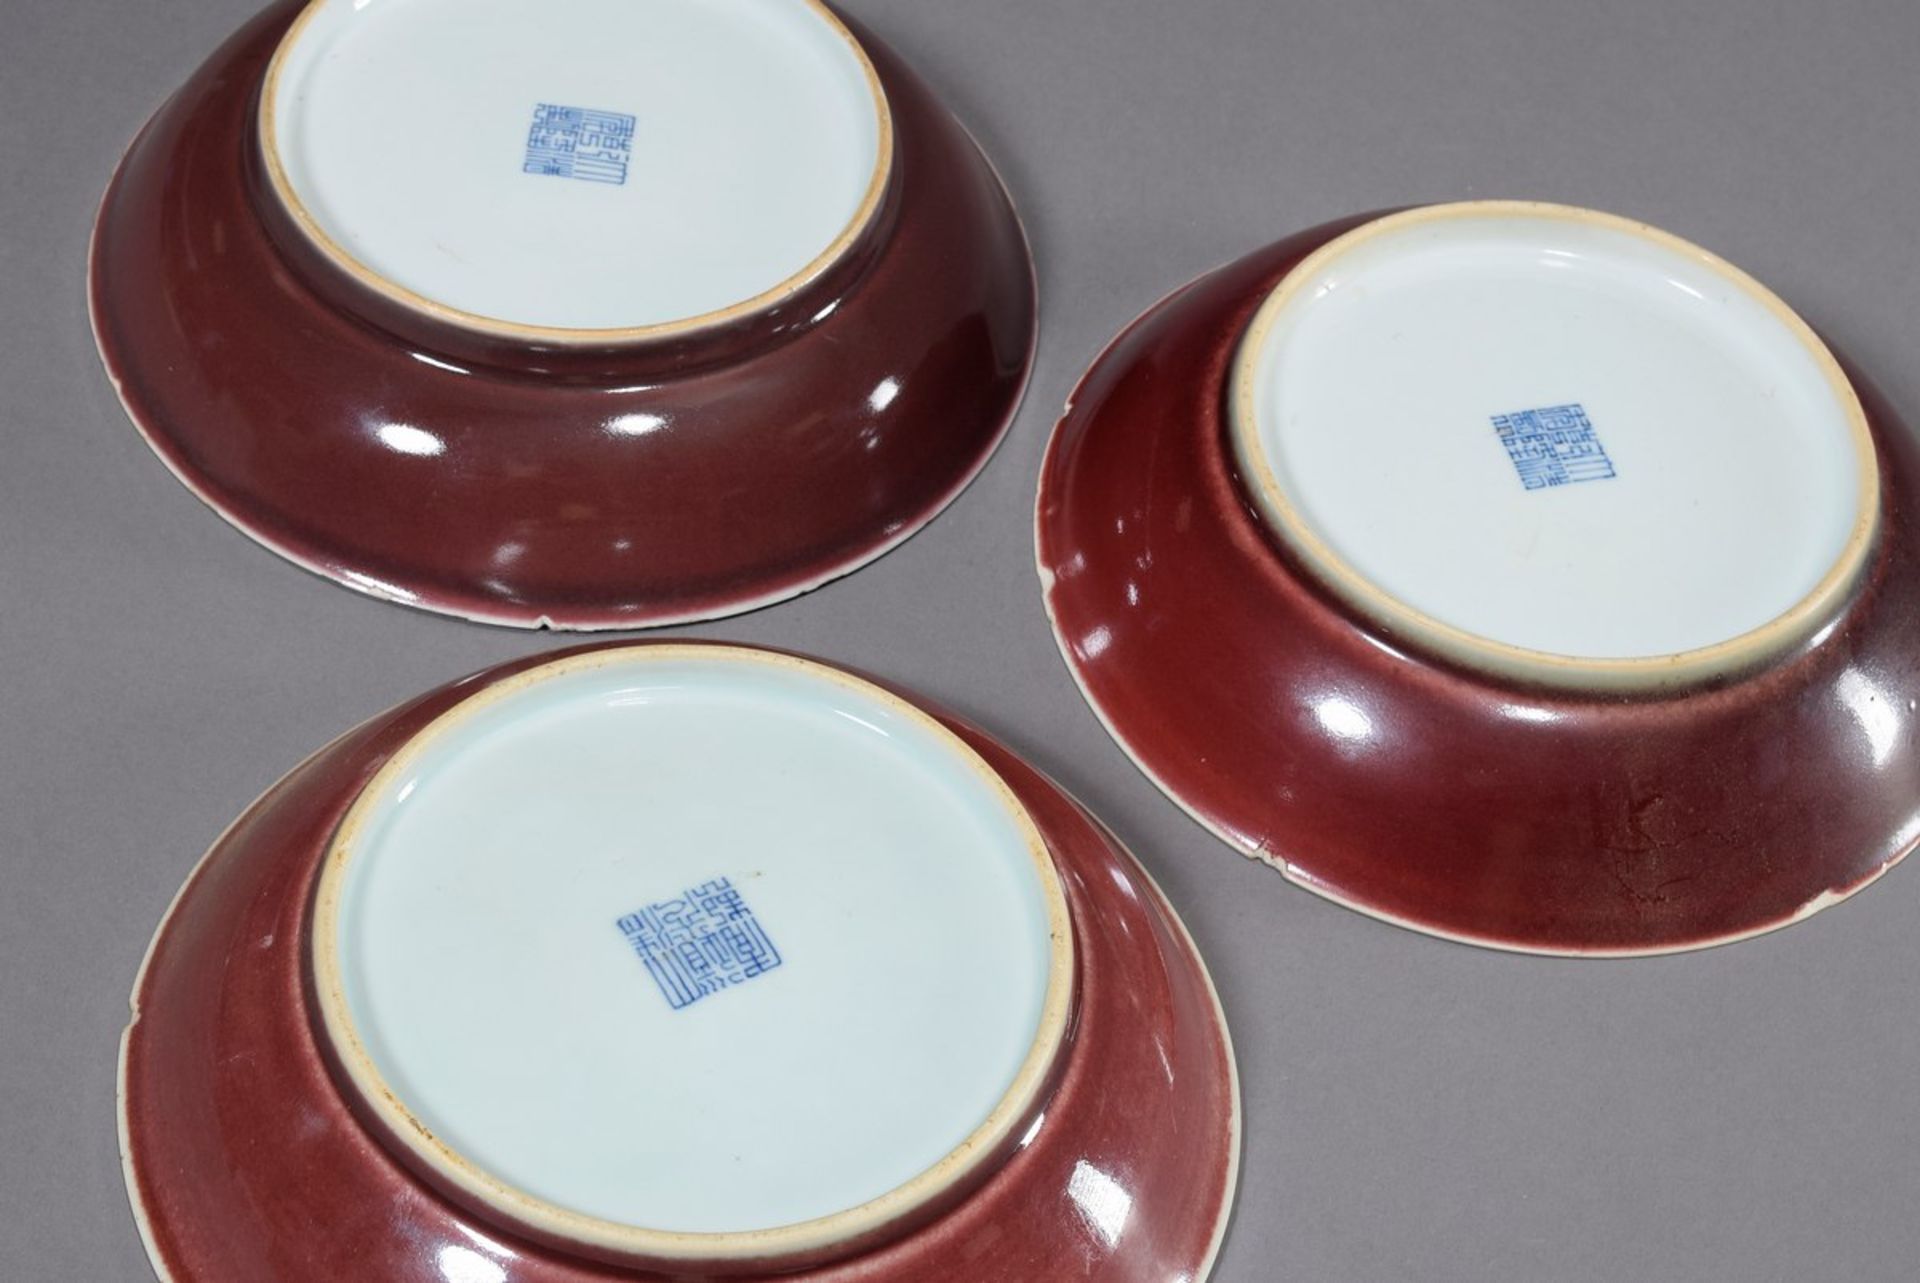 3 Diverse chinesische Porzellan Teller mit Ochsenblut Glasur am Boden blaue Qianlong und Daoguang - Image 5 of 10